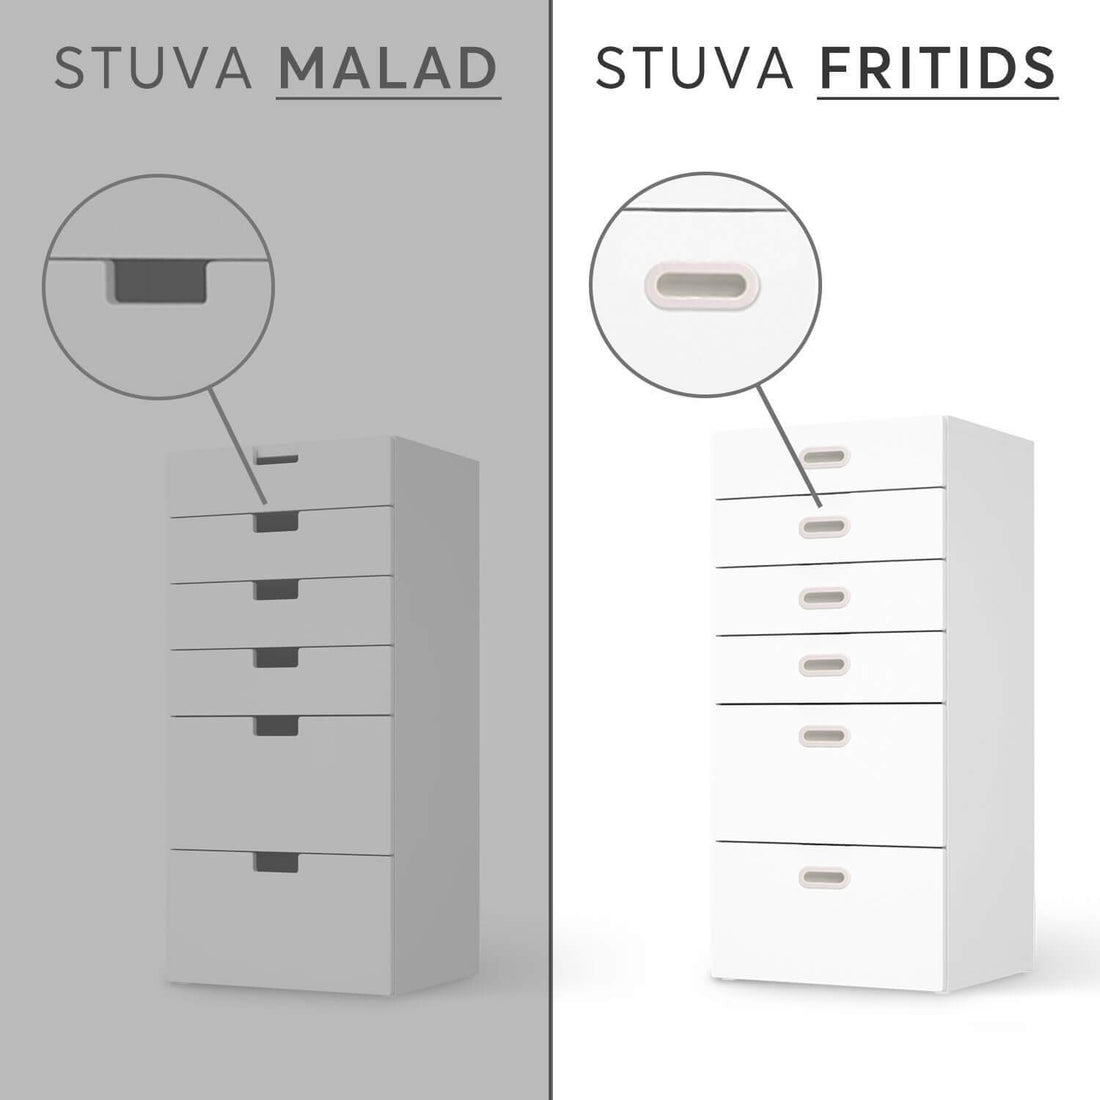 Vergleich IKEA Stuva Fritids / Malad - Firefighter